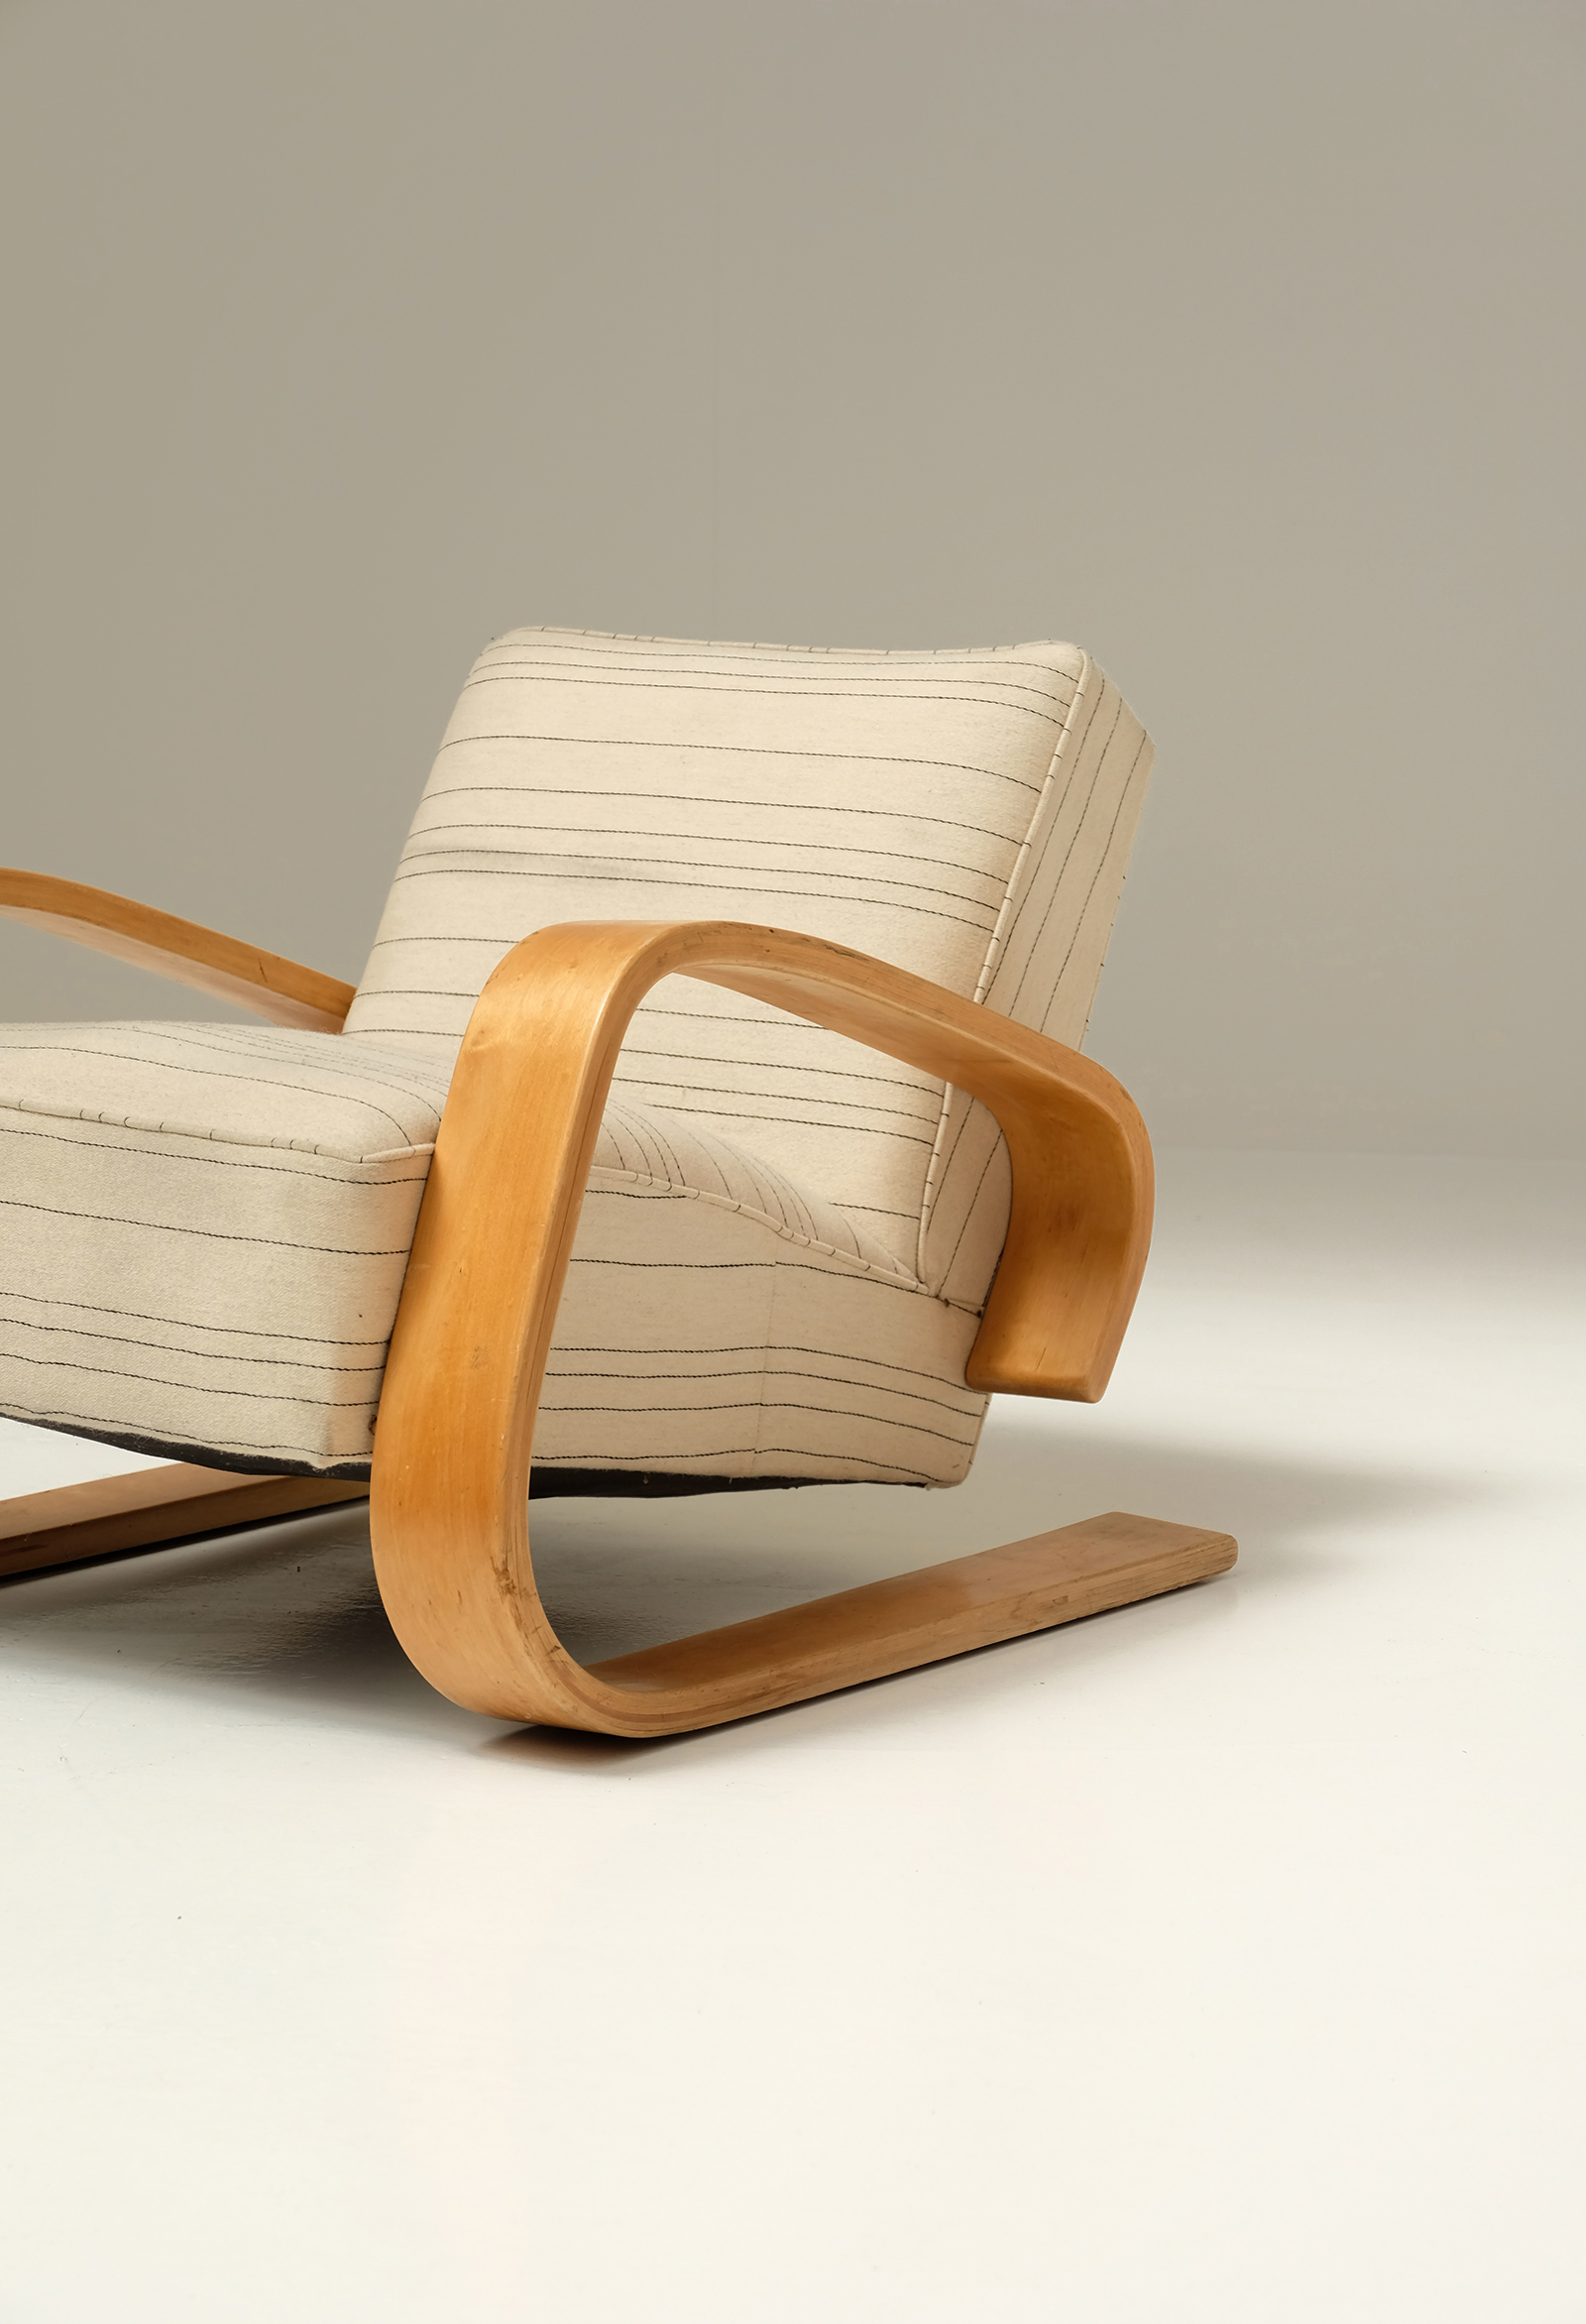 City Furniture | Alvar Aalto Artek Tank Chair